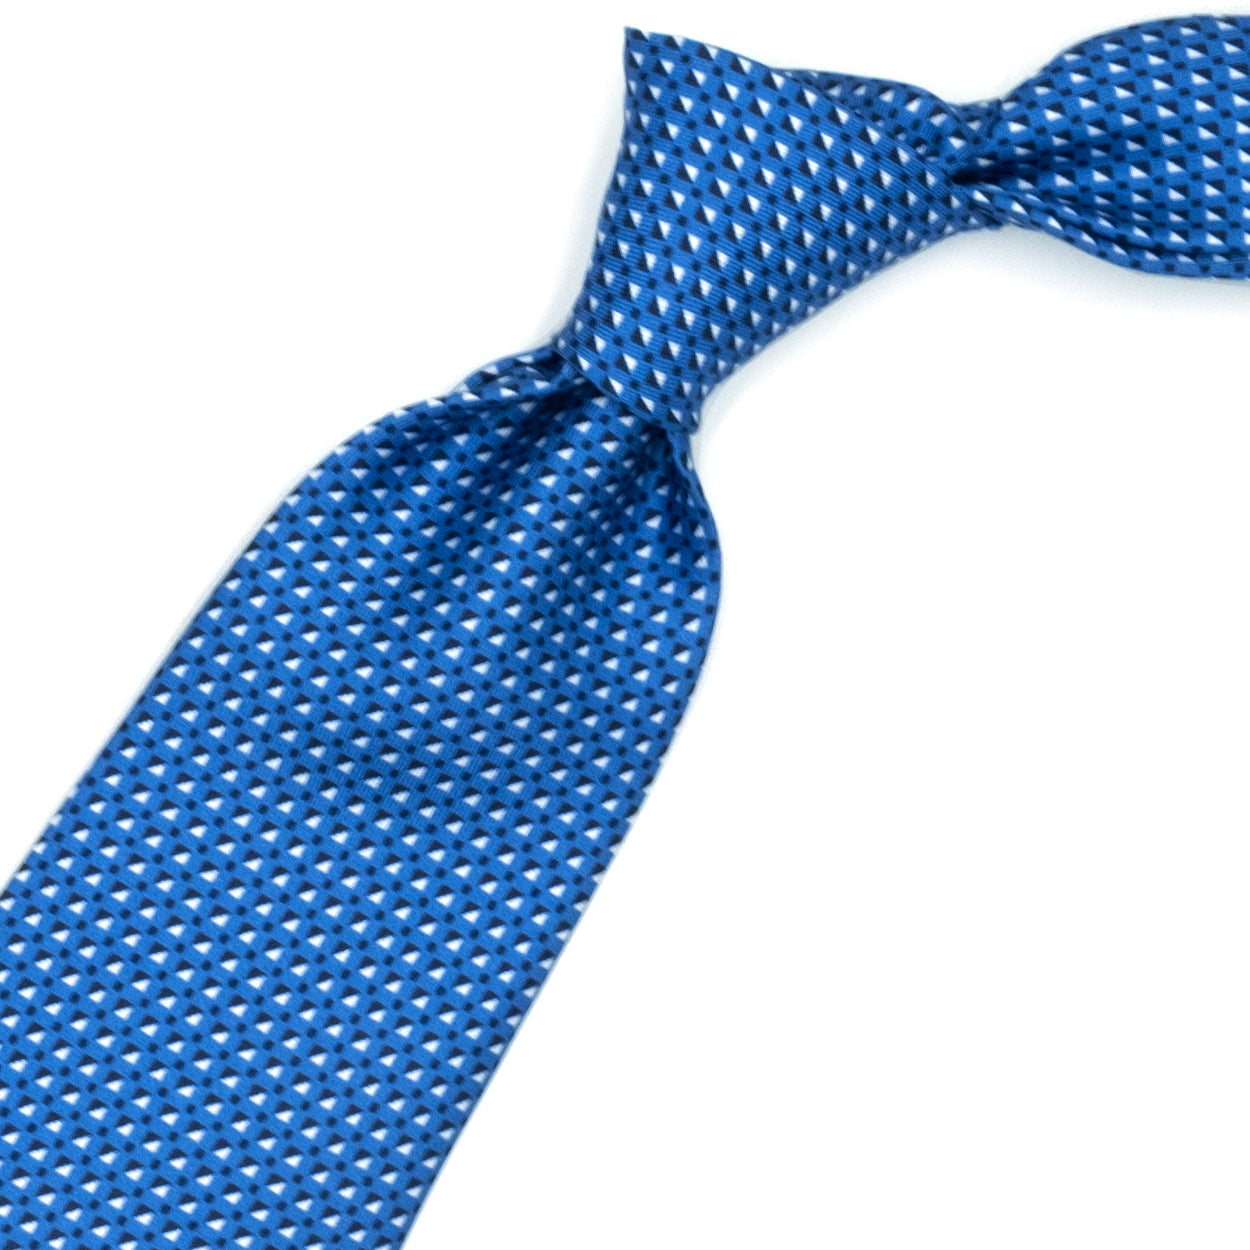 Cravatta azzurra con pattern geometrico blu e bianco